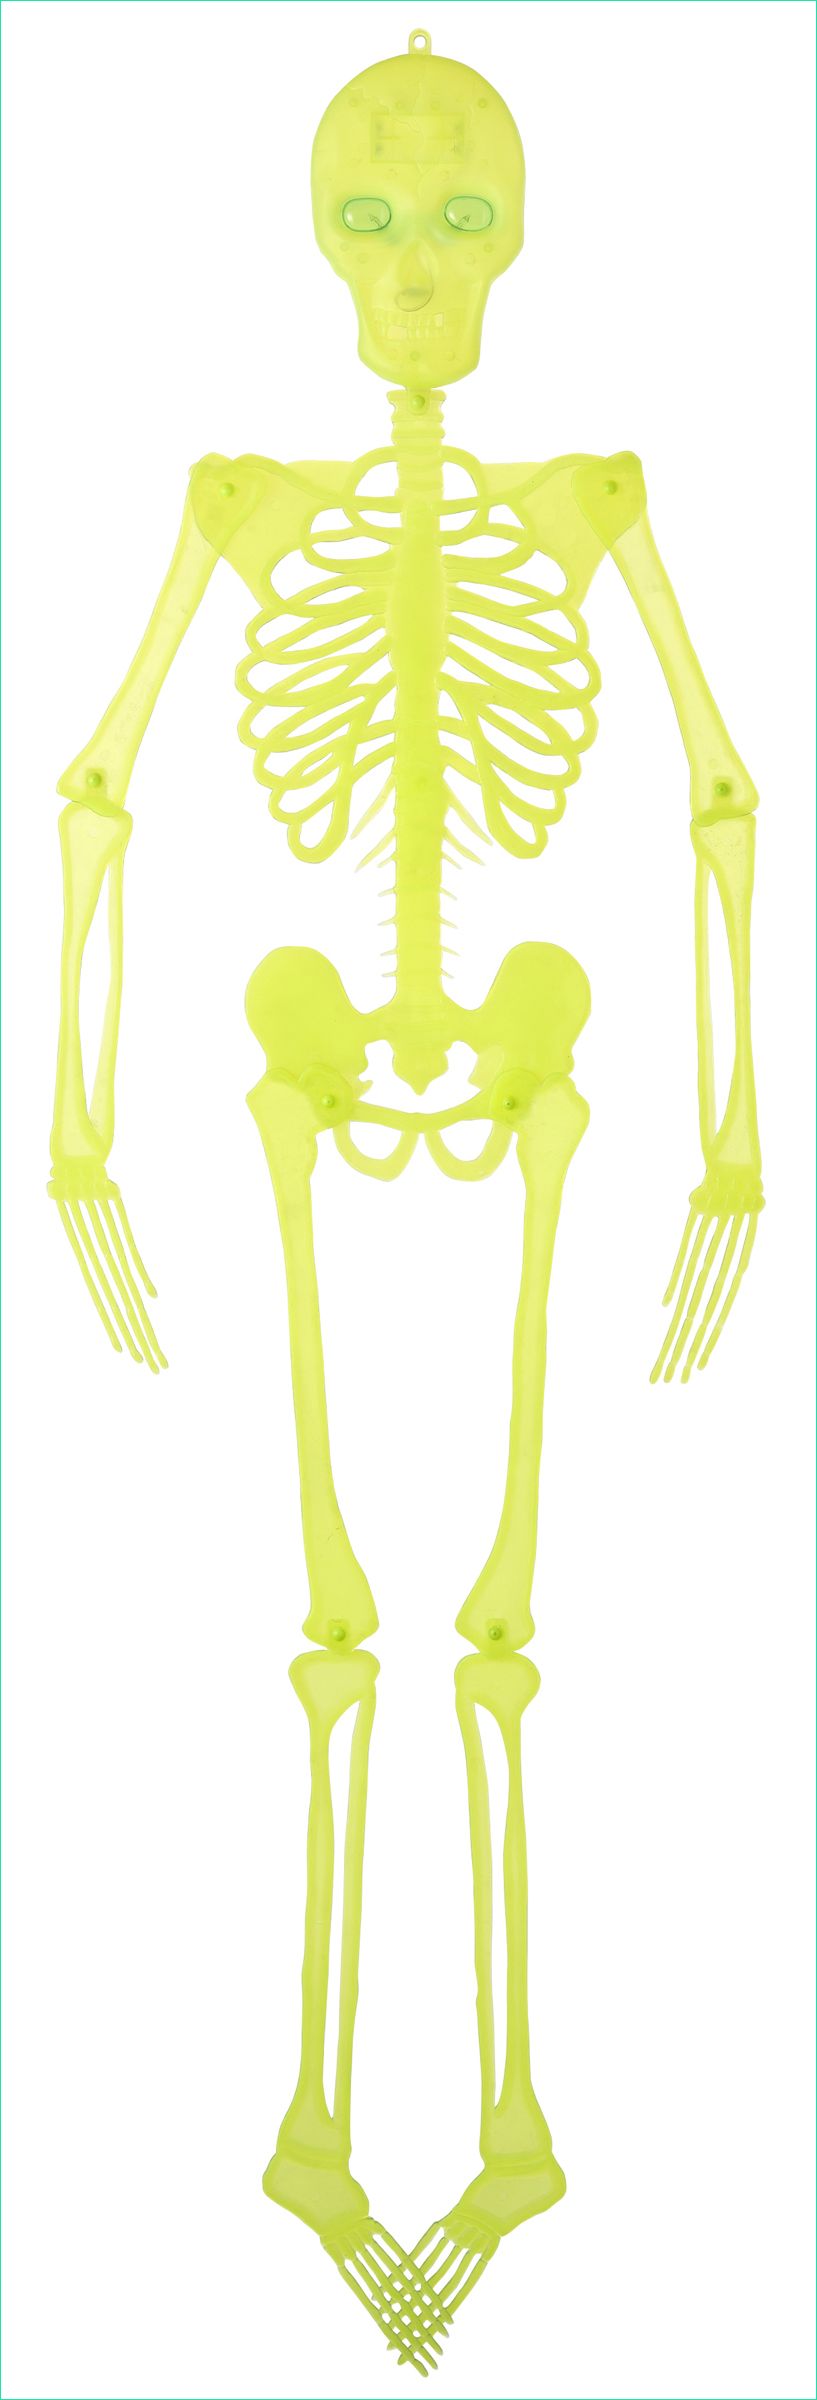 squelette halloween articule de 150m phosphorescent xml 518 588 602 8595